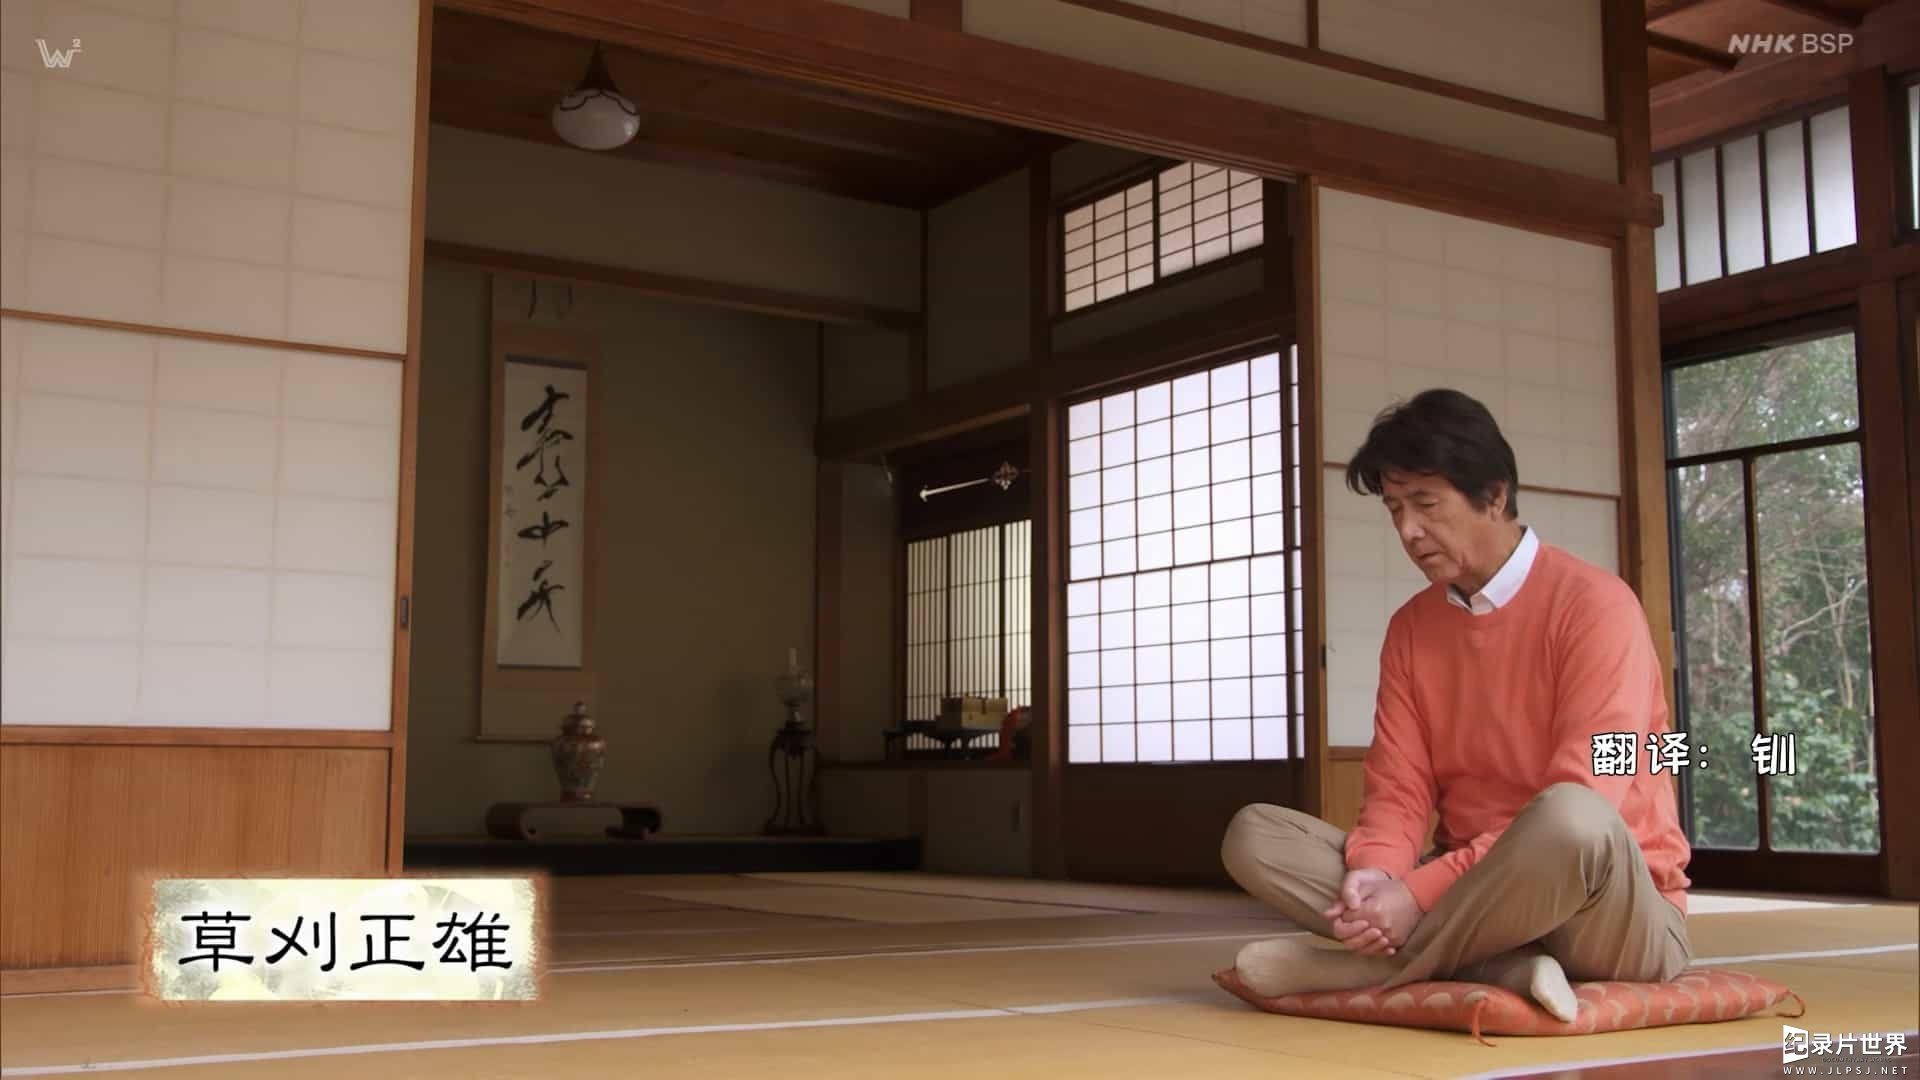 NHK纪录片《美之壶系列：天平佛像》全1集 